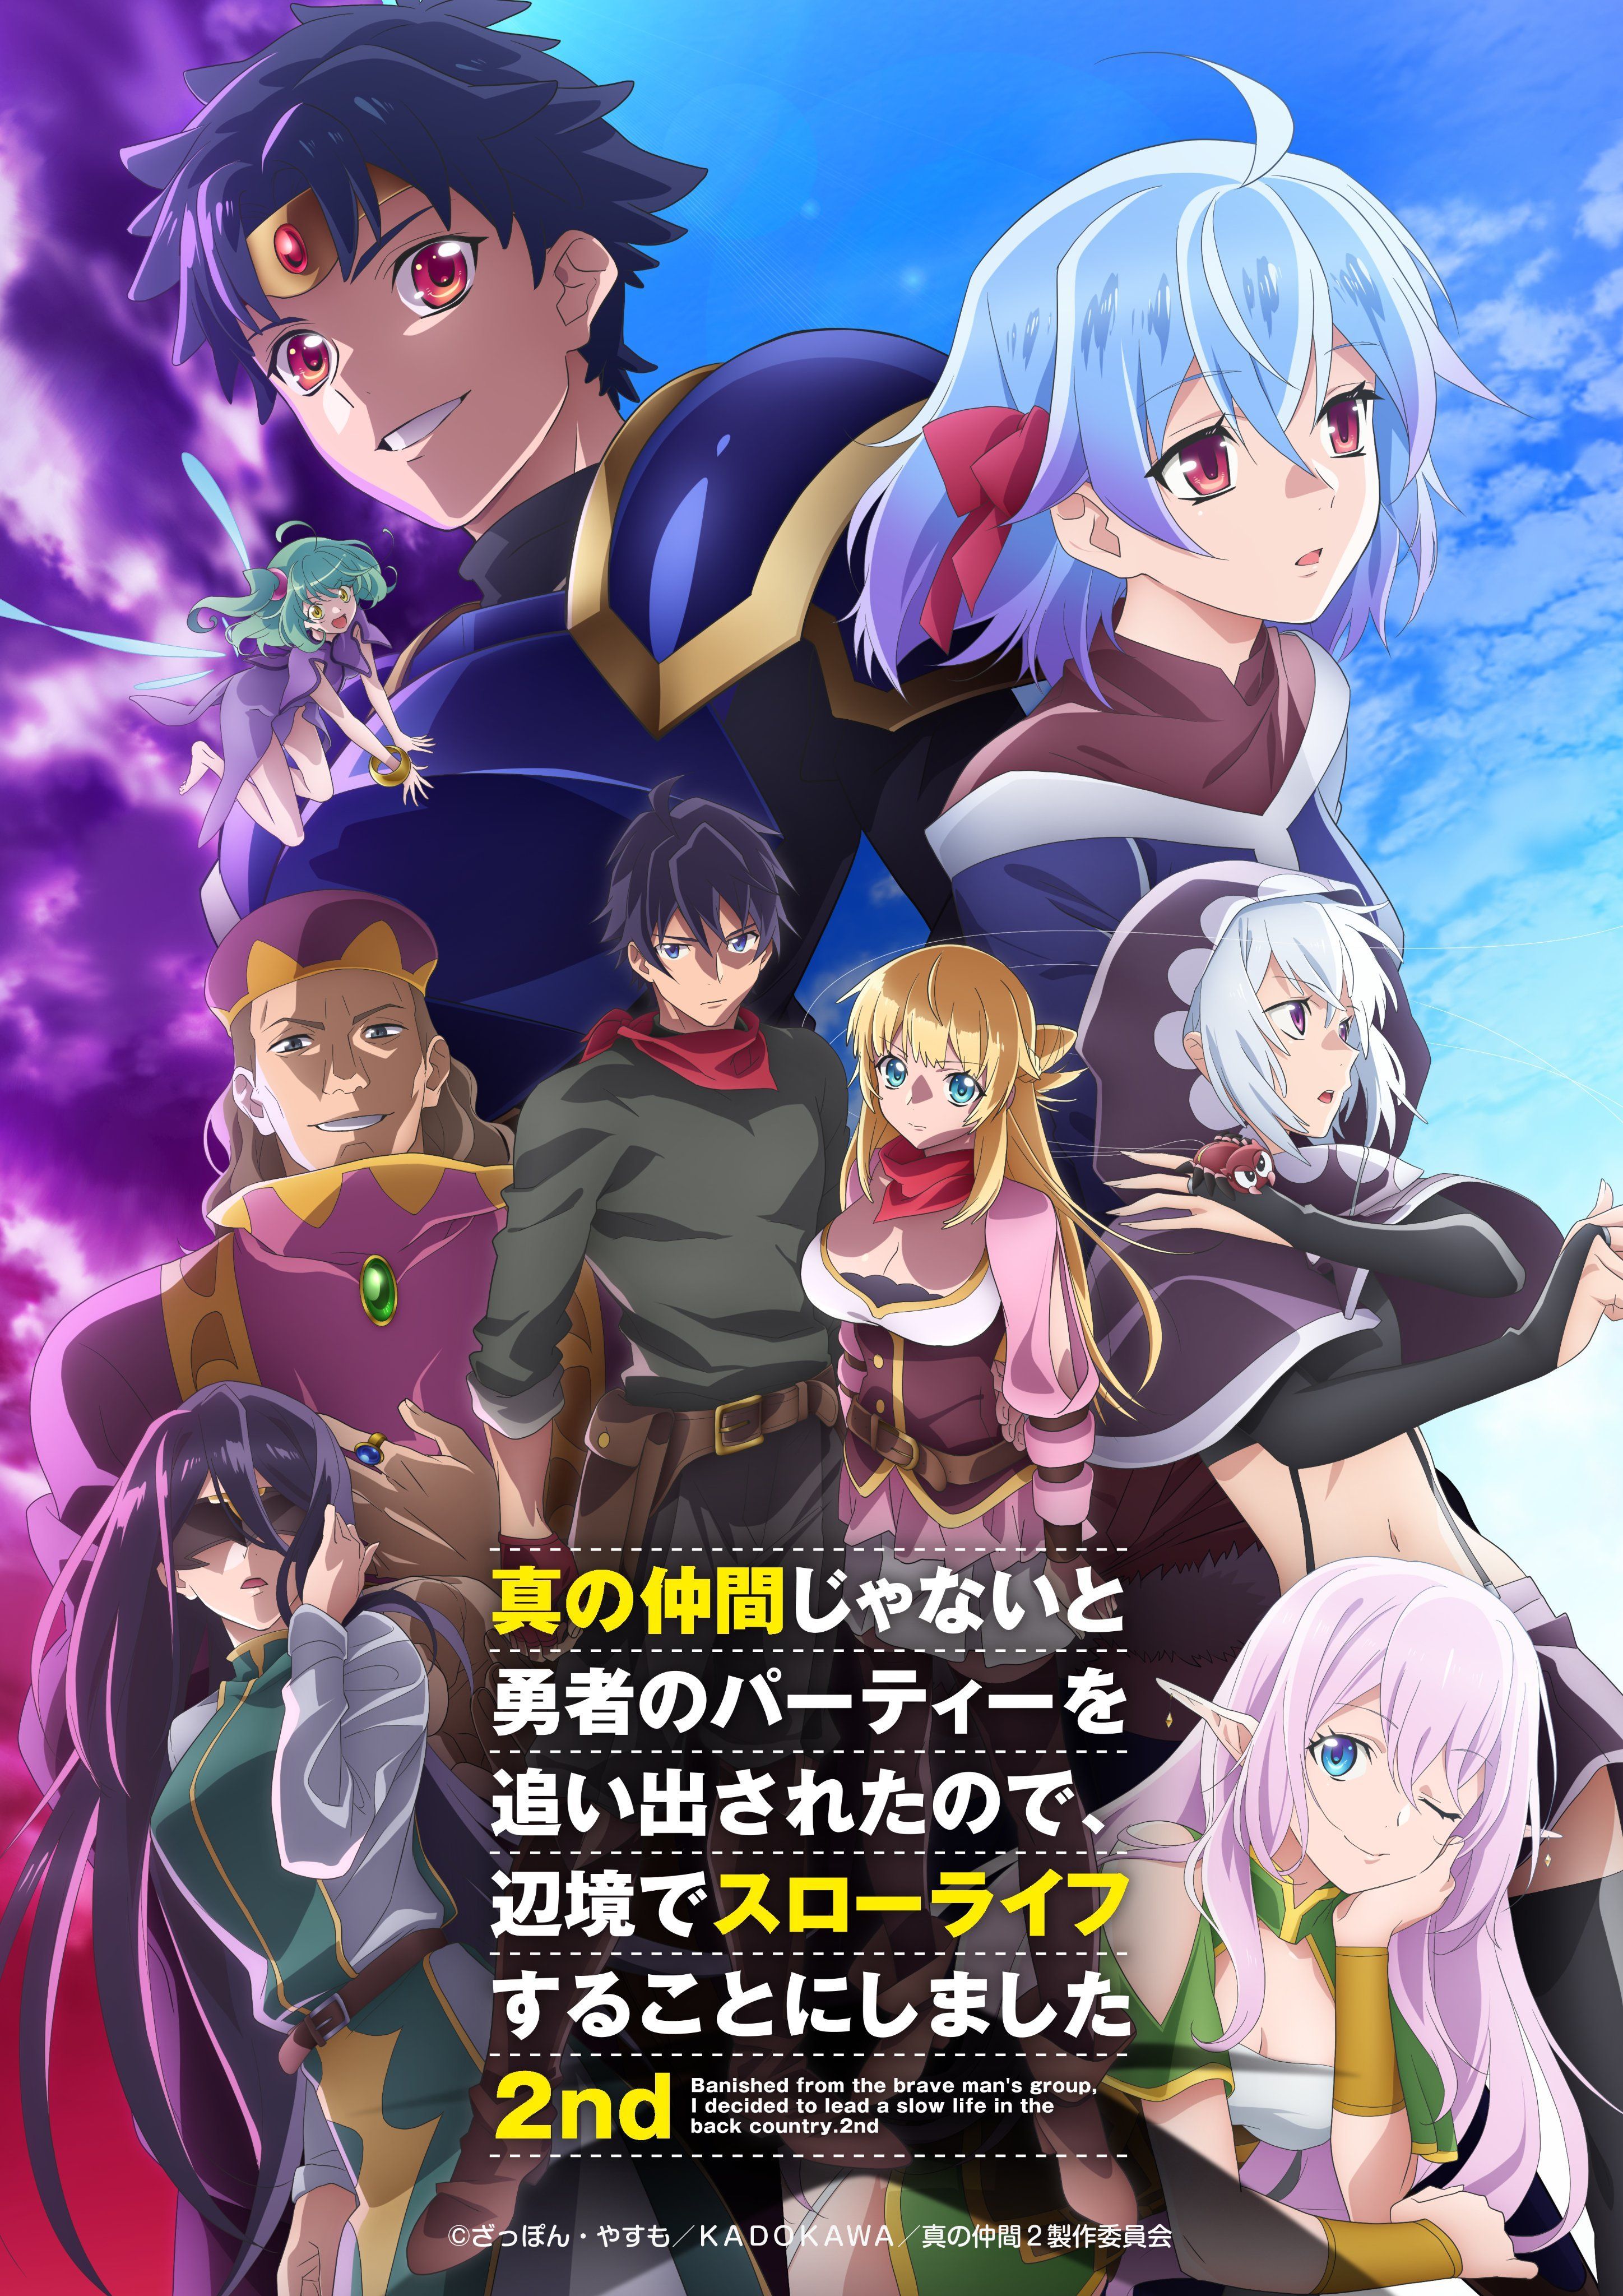 Seishun Buta Yarou' Light Novel's 'Daigakusei-hen' Gets Anime 